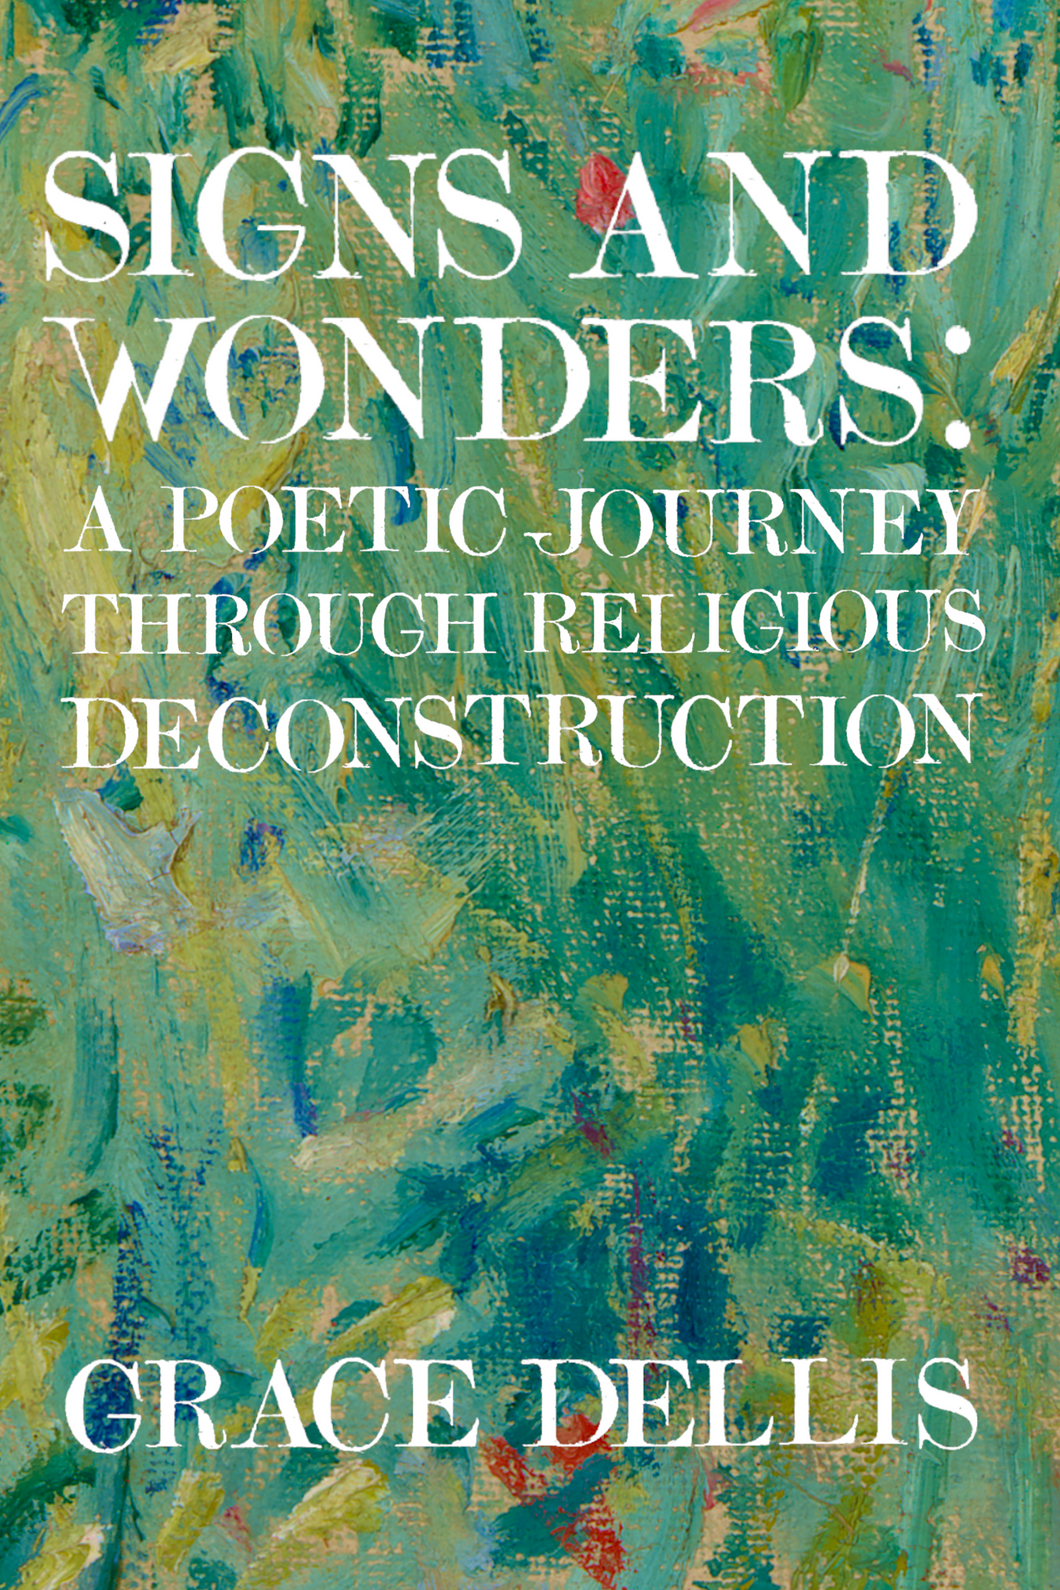 Signs and Wonders: A poetic journey through religious deconstruction, by Grace Dellis-Print Books-Bottlecap Press